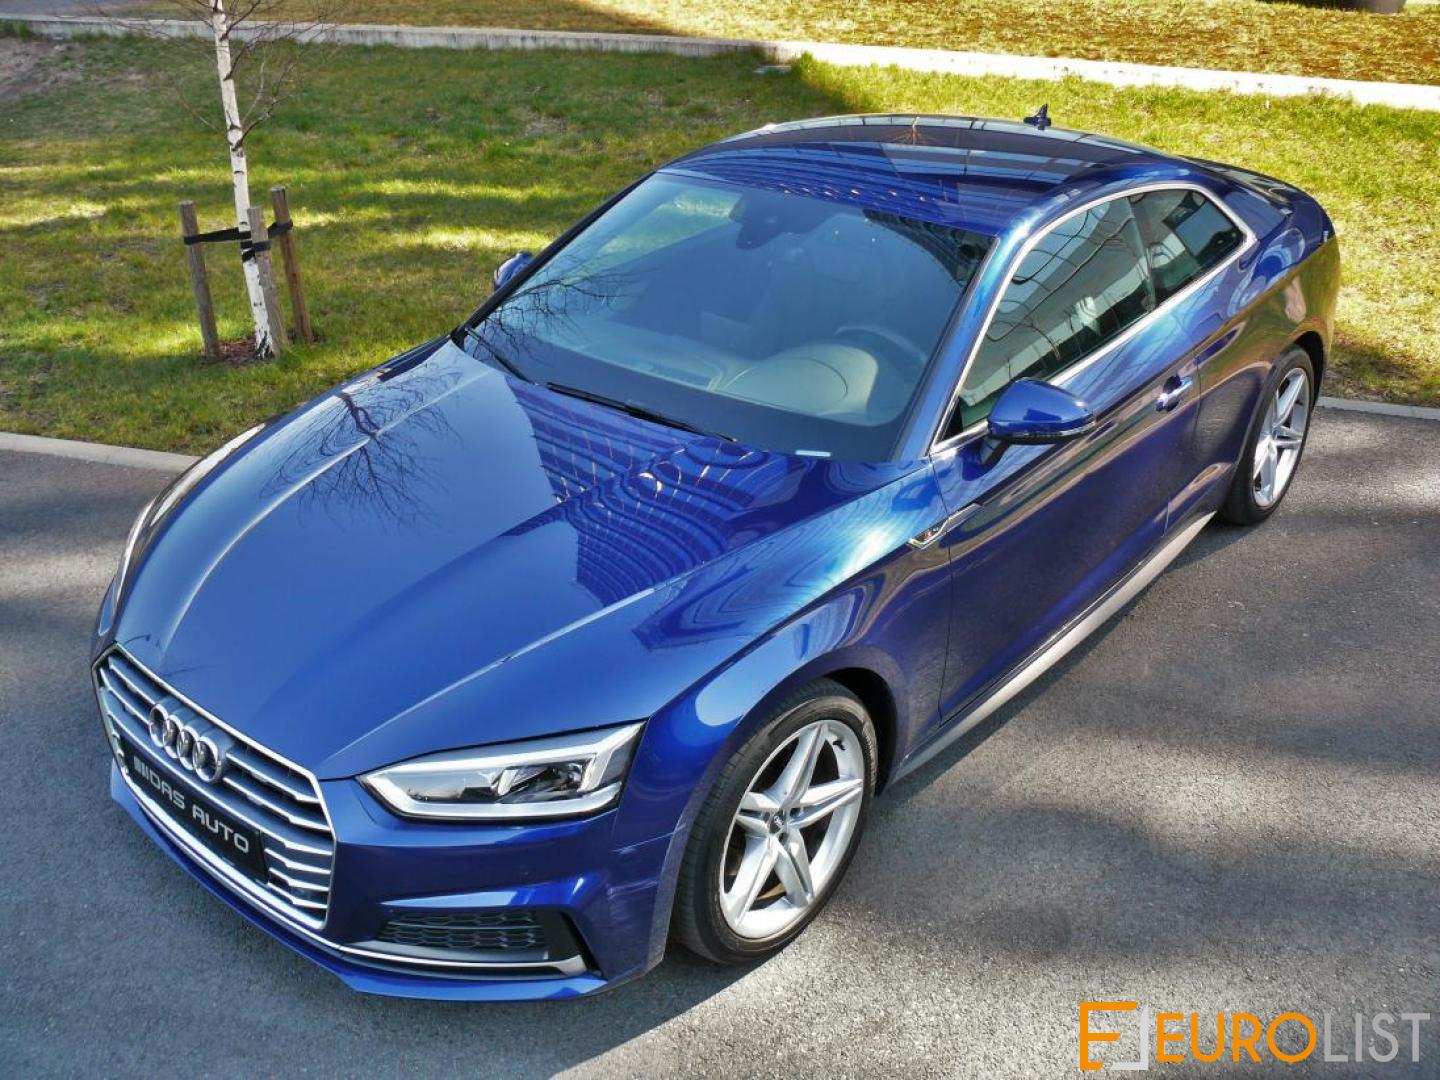 EUROLIST.LV - New Model Audi A5 S-line...